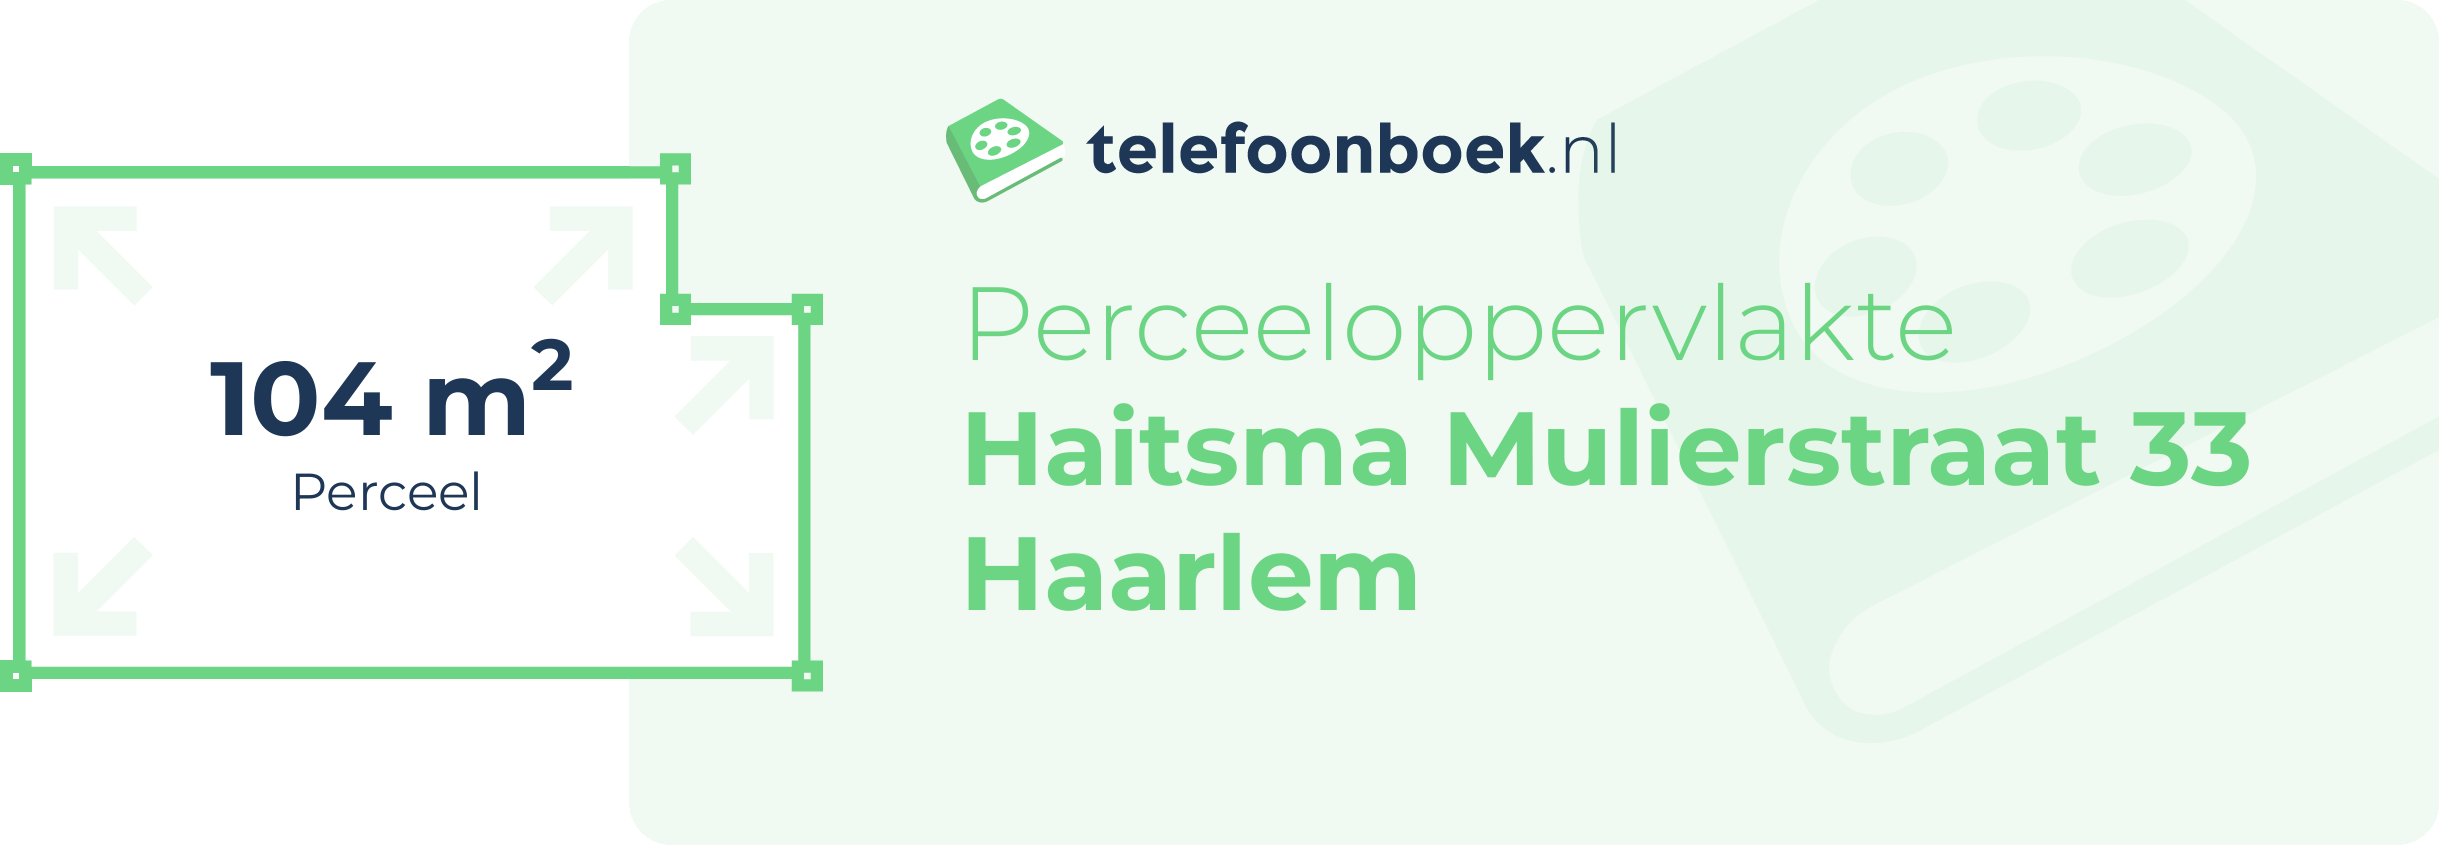 Perceeloppervlakte Haitsma Mulierstraat 33 Haarlem